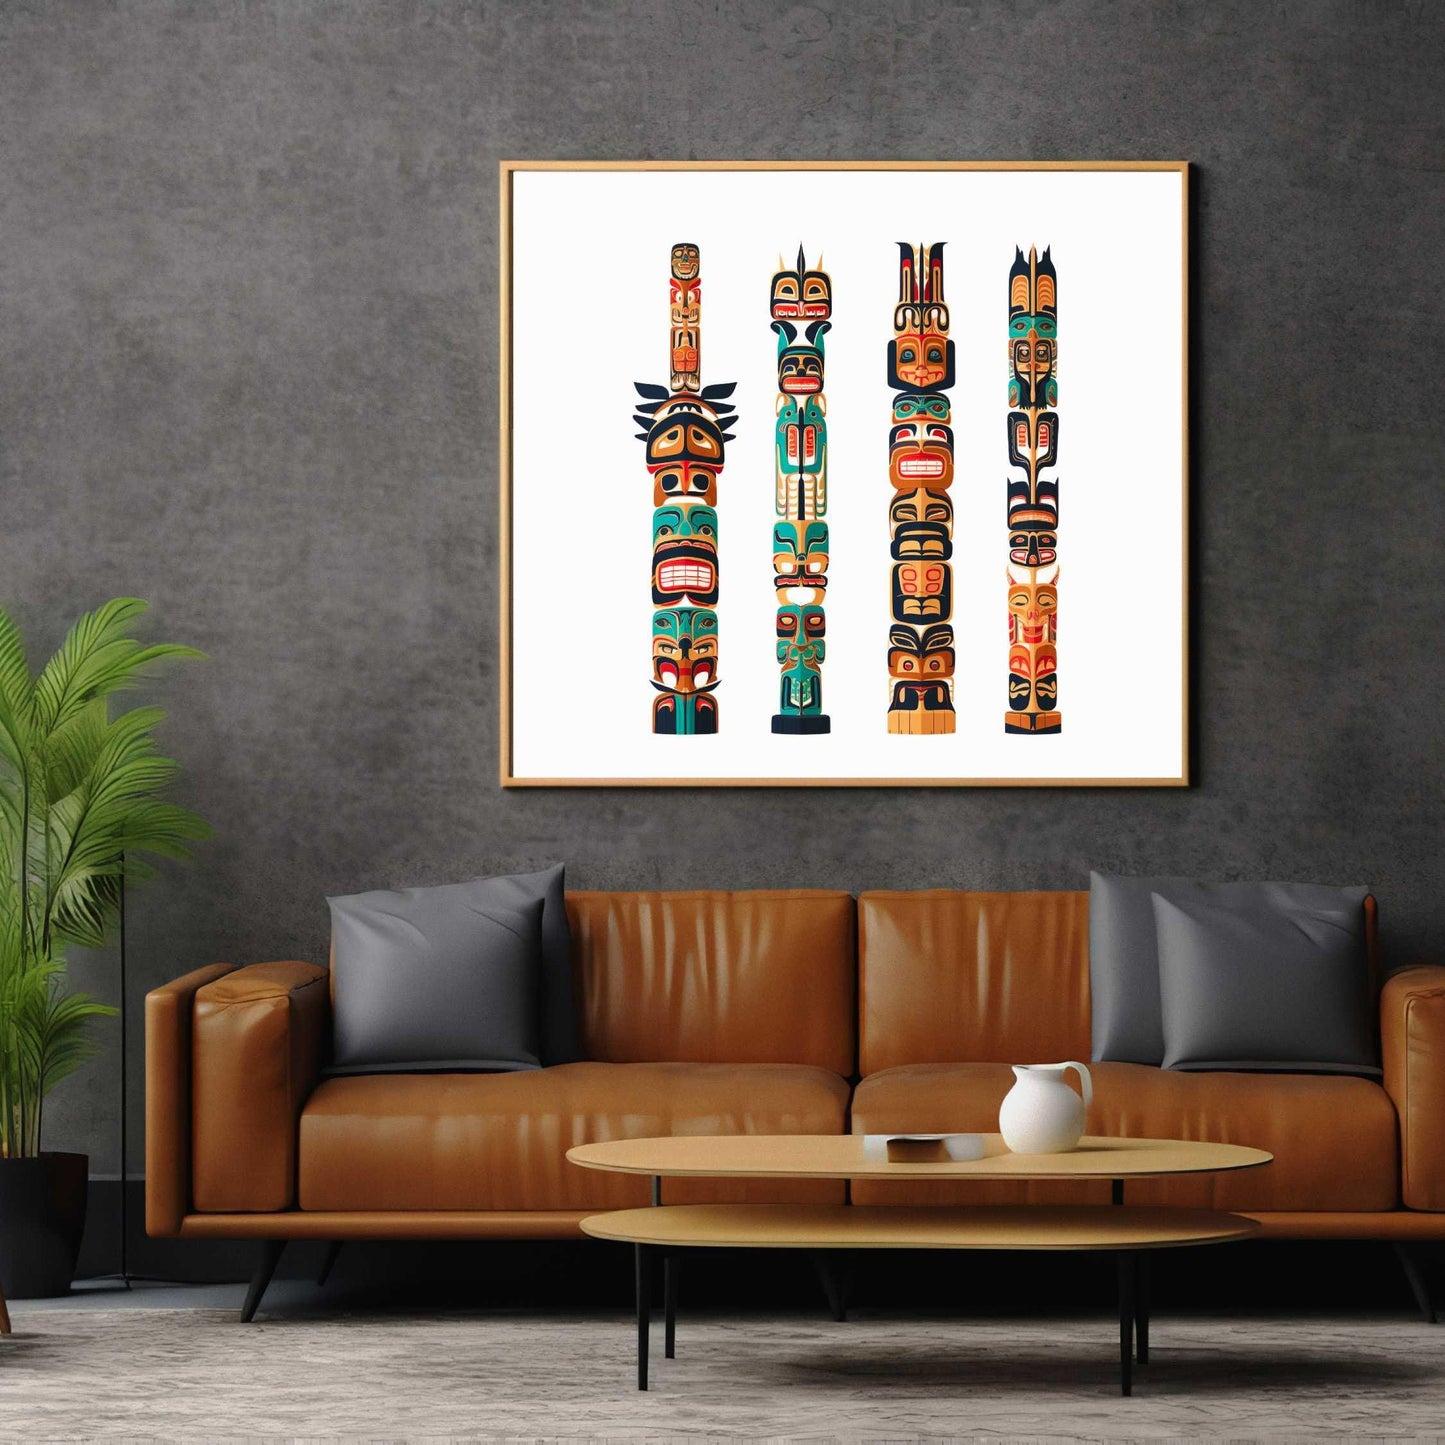 Tribal Wall Art Print - Artkins Lifestyle